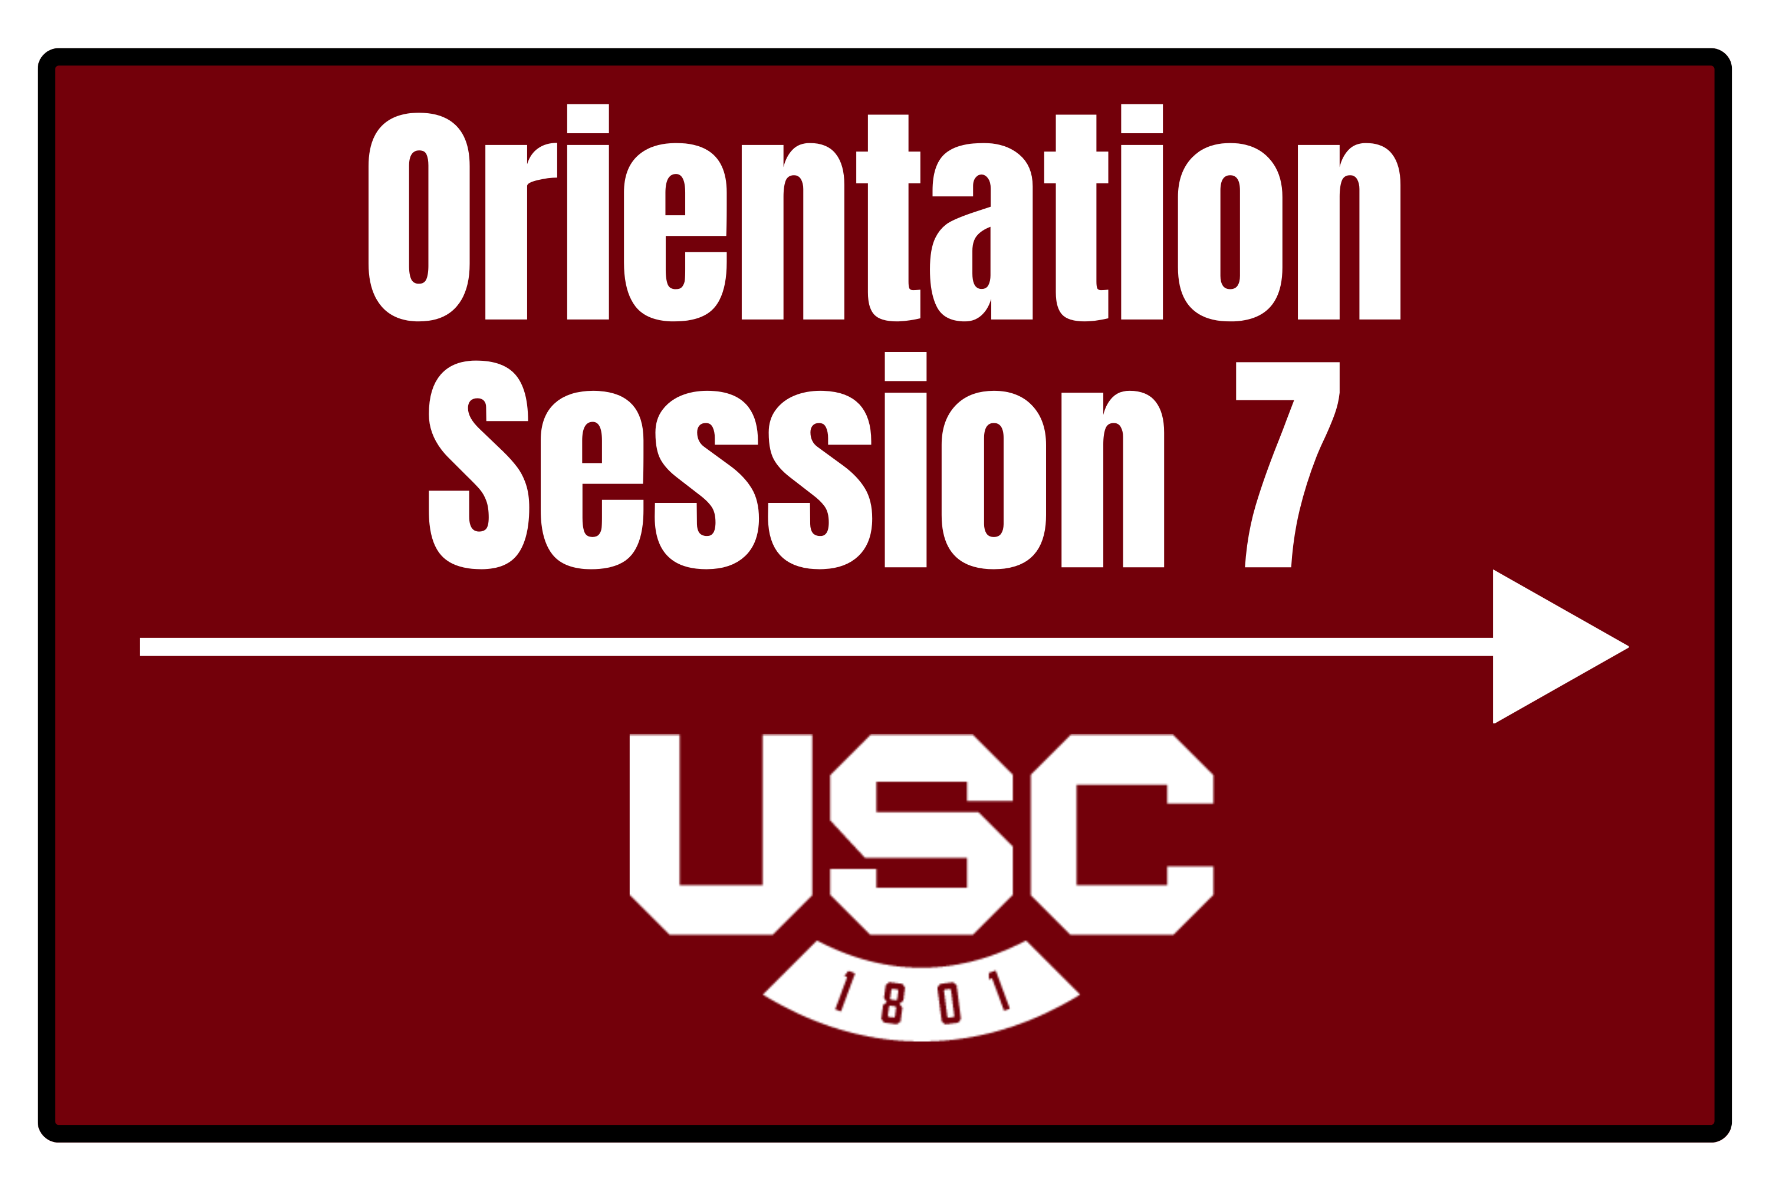 Orientation Session 7: June 17 - 18